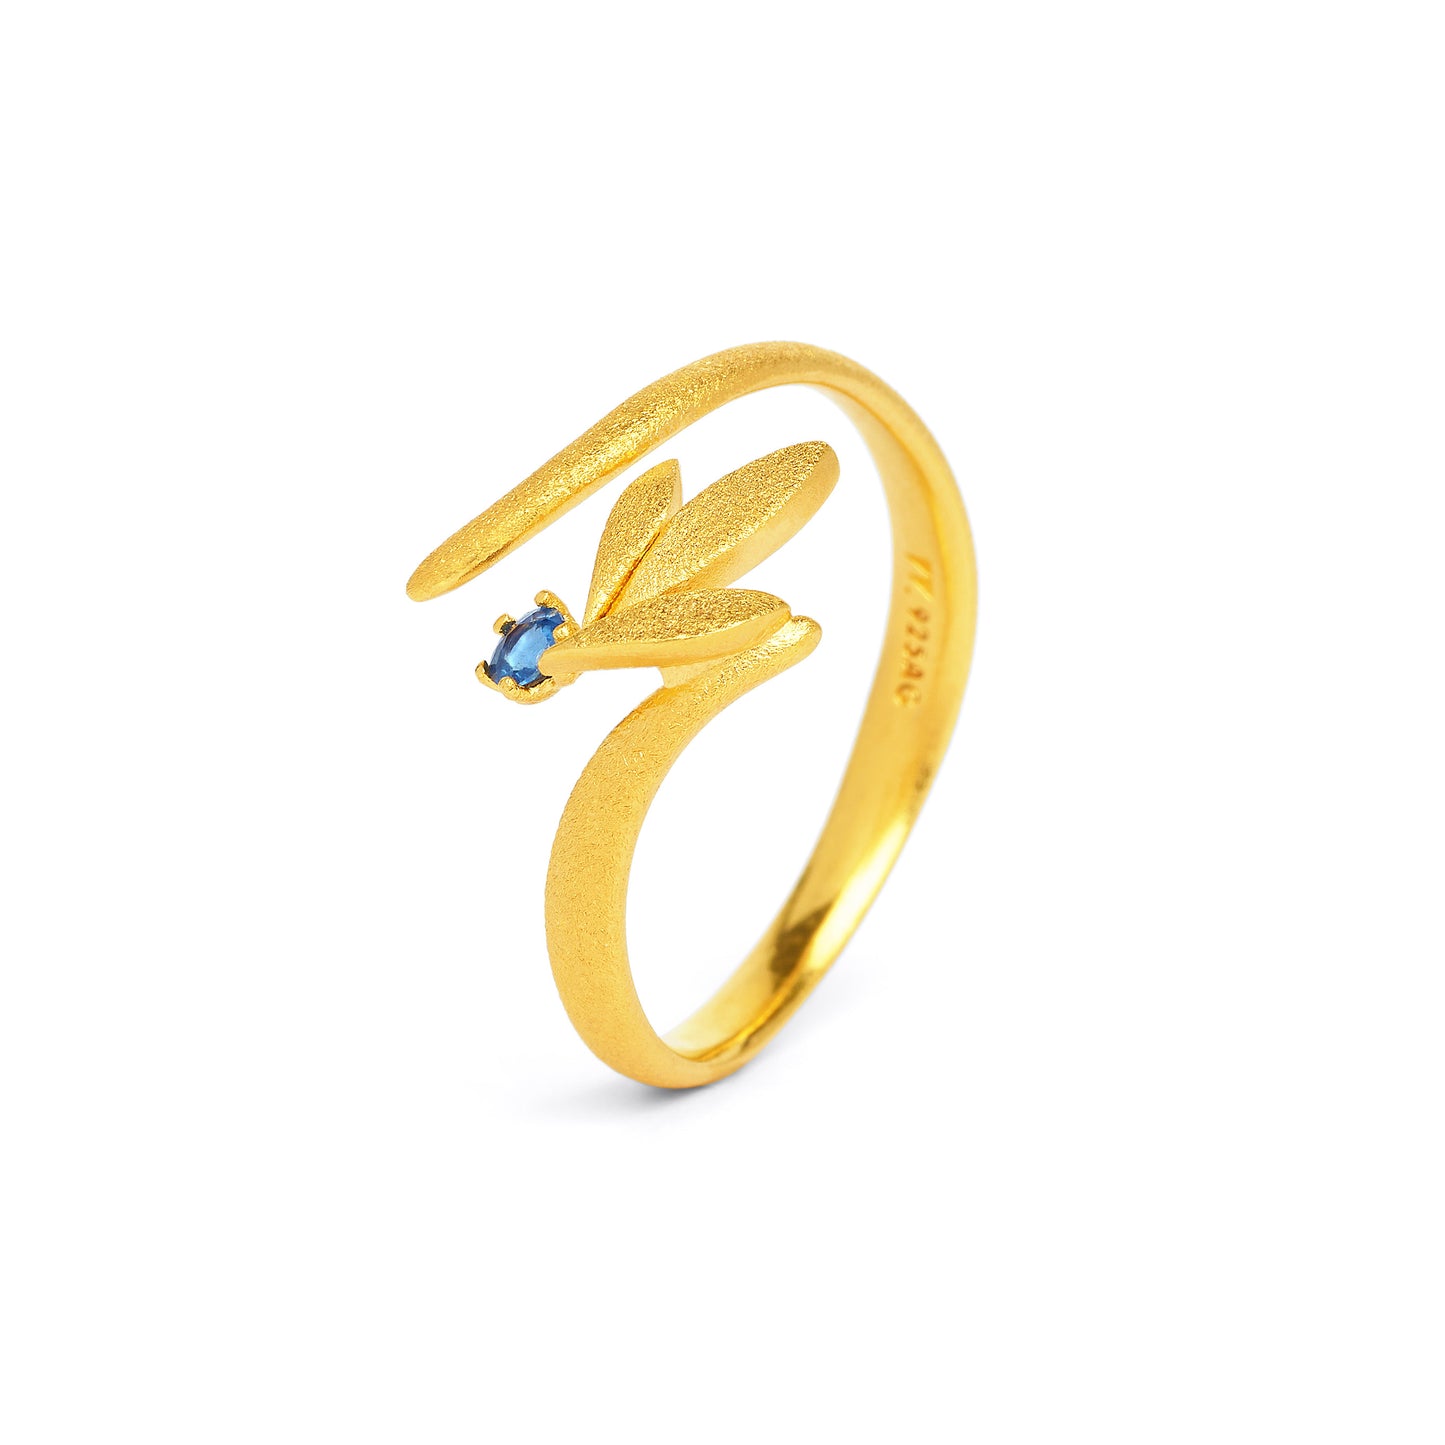 Bernd Wolf Collection "Strelisa" Sapphire Ring